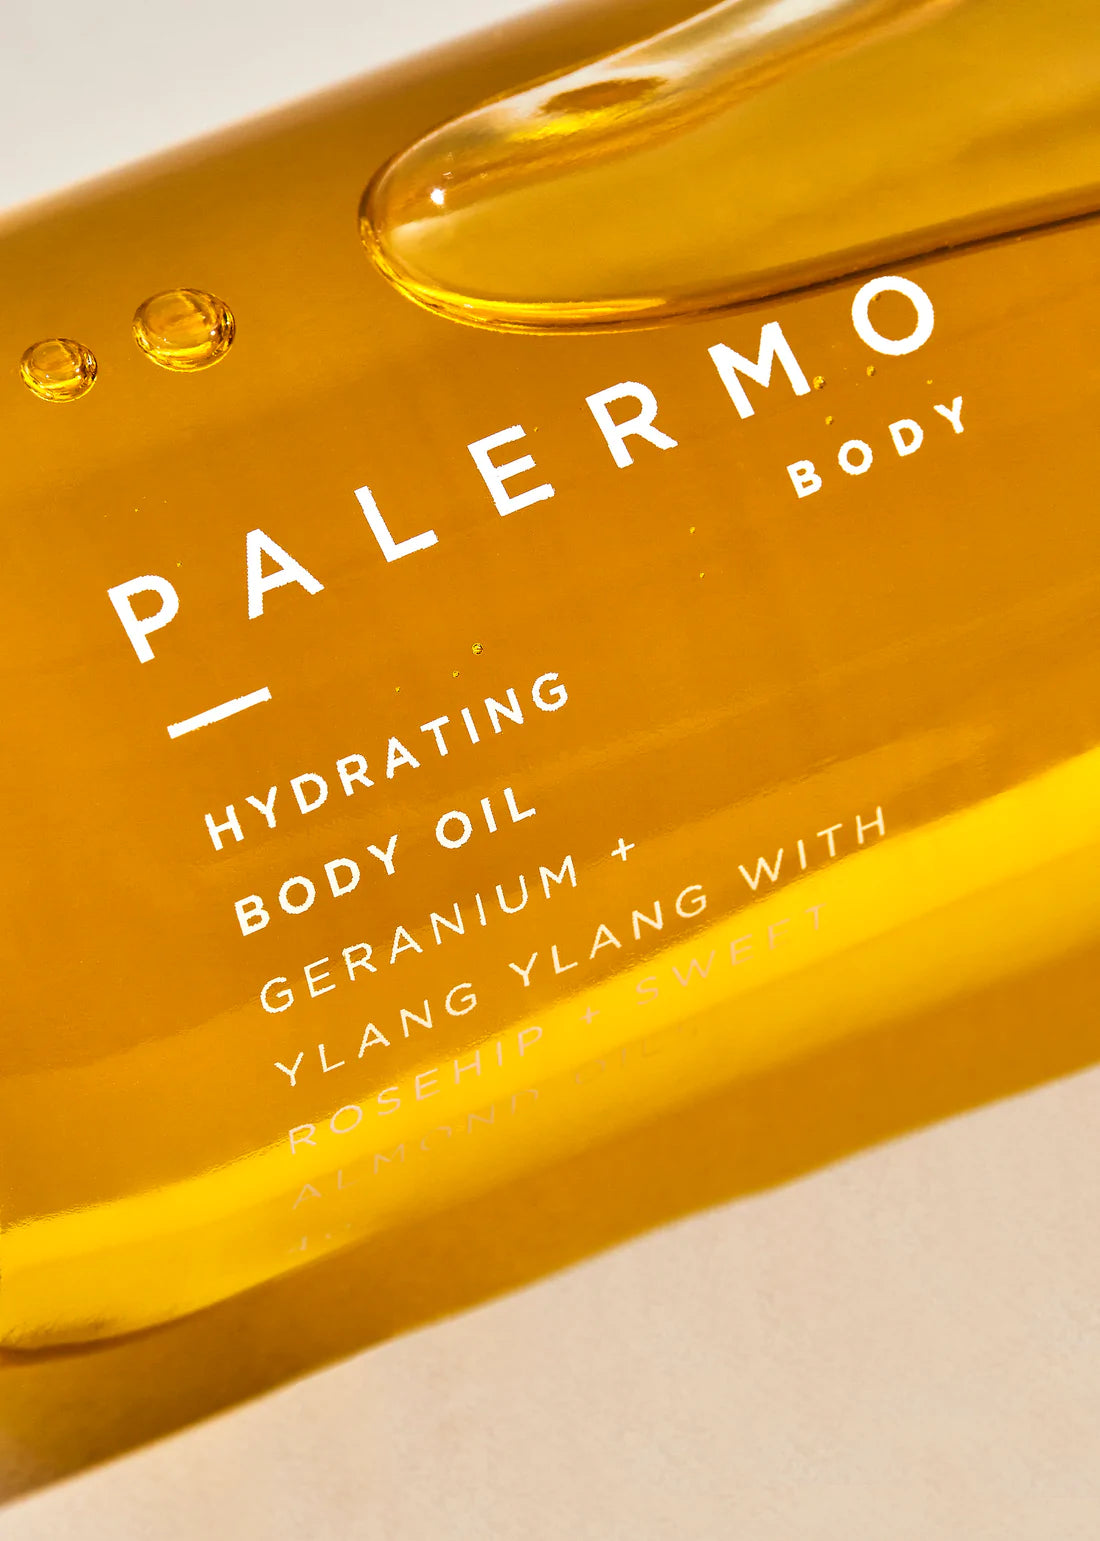 Hydrating Body Oil | Geranium + Ylang Ylang